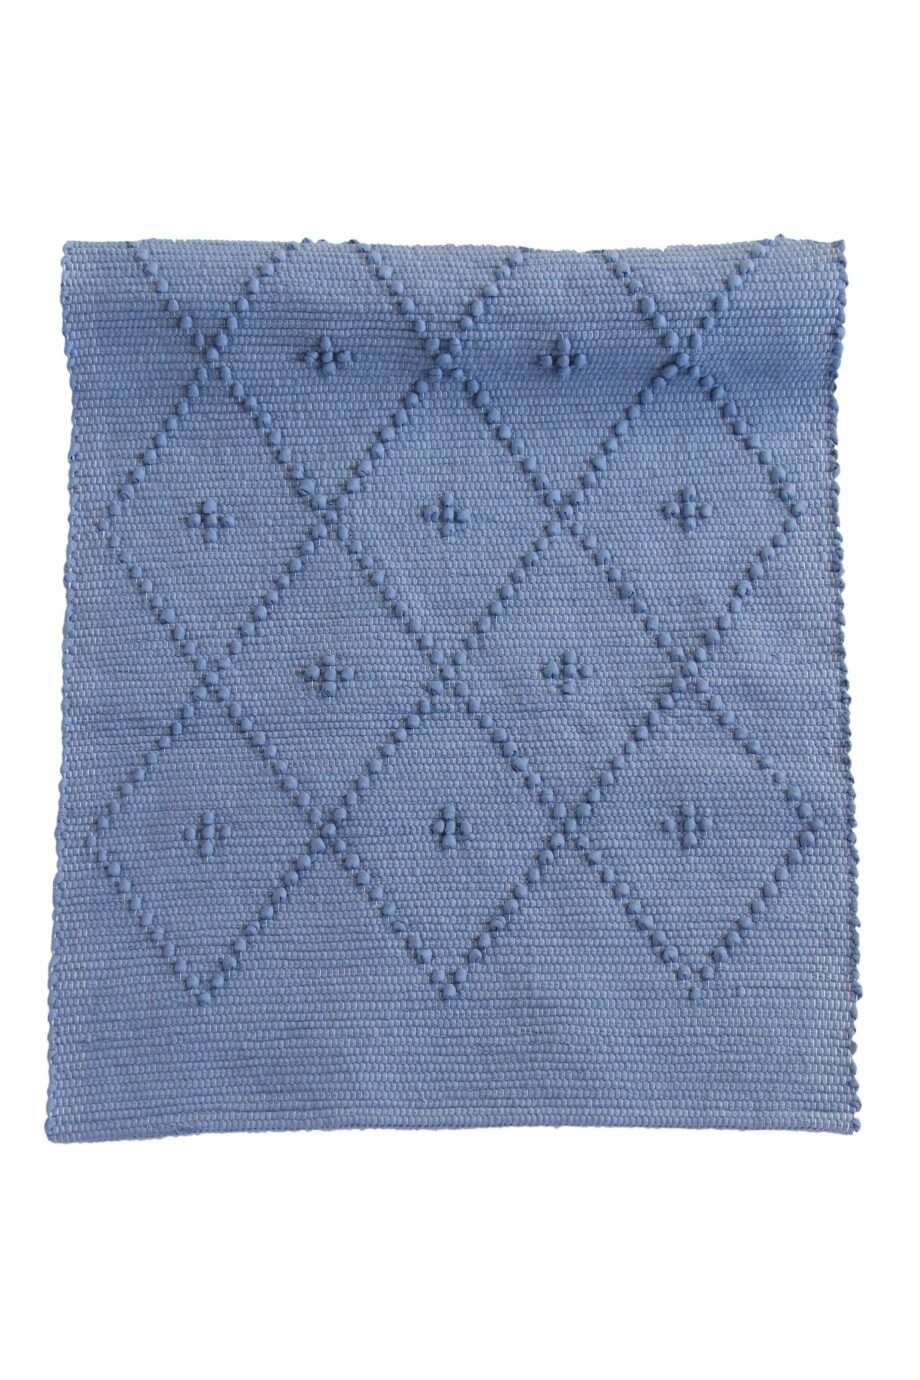 diamond jeans blue woven cotton floor mat small